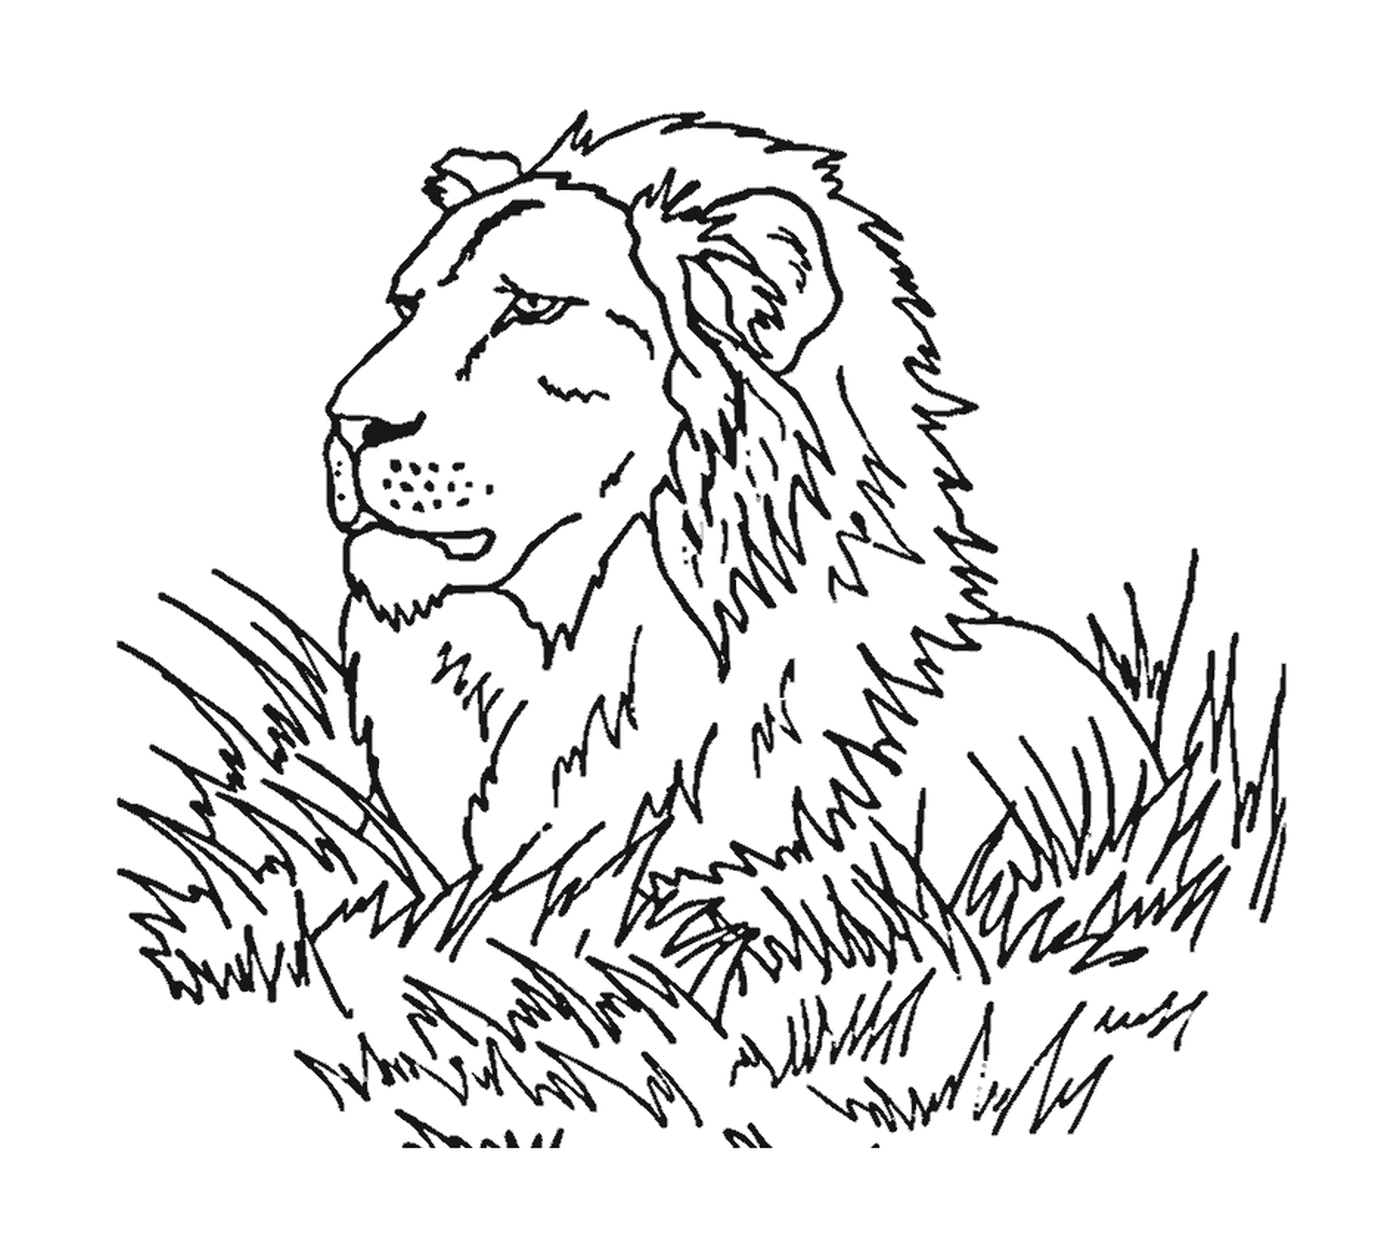  Leão na savana, majestoso 